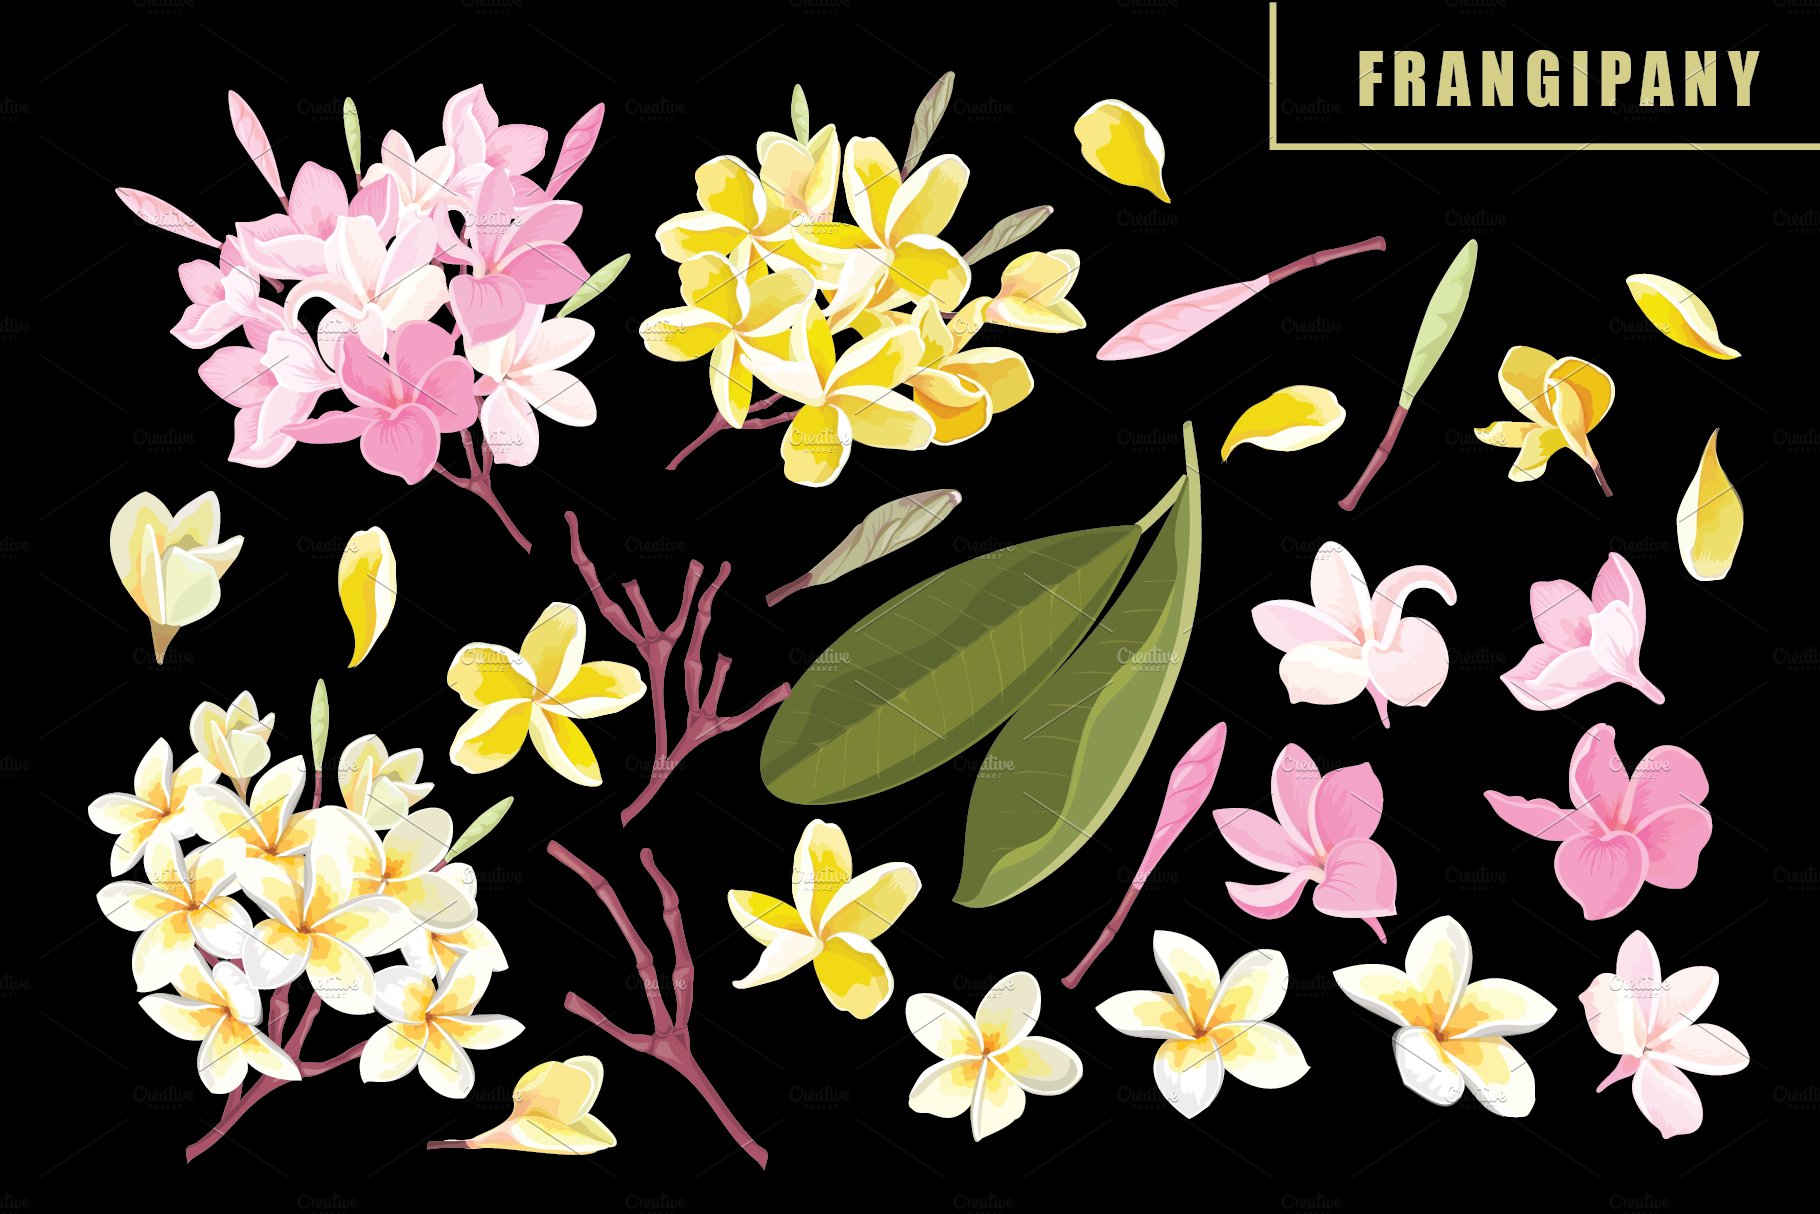 53 Floral brushes for Illustratorpreview image.